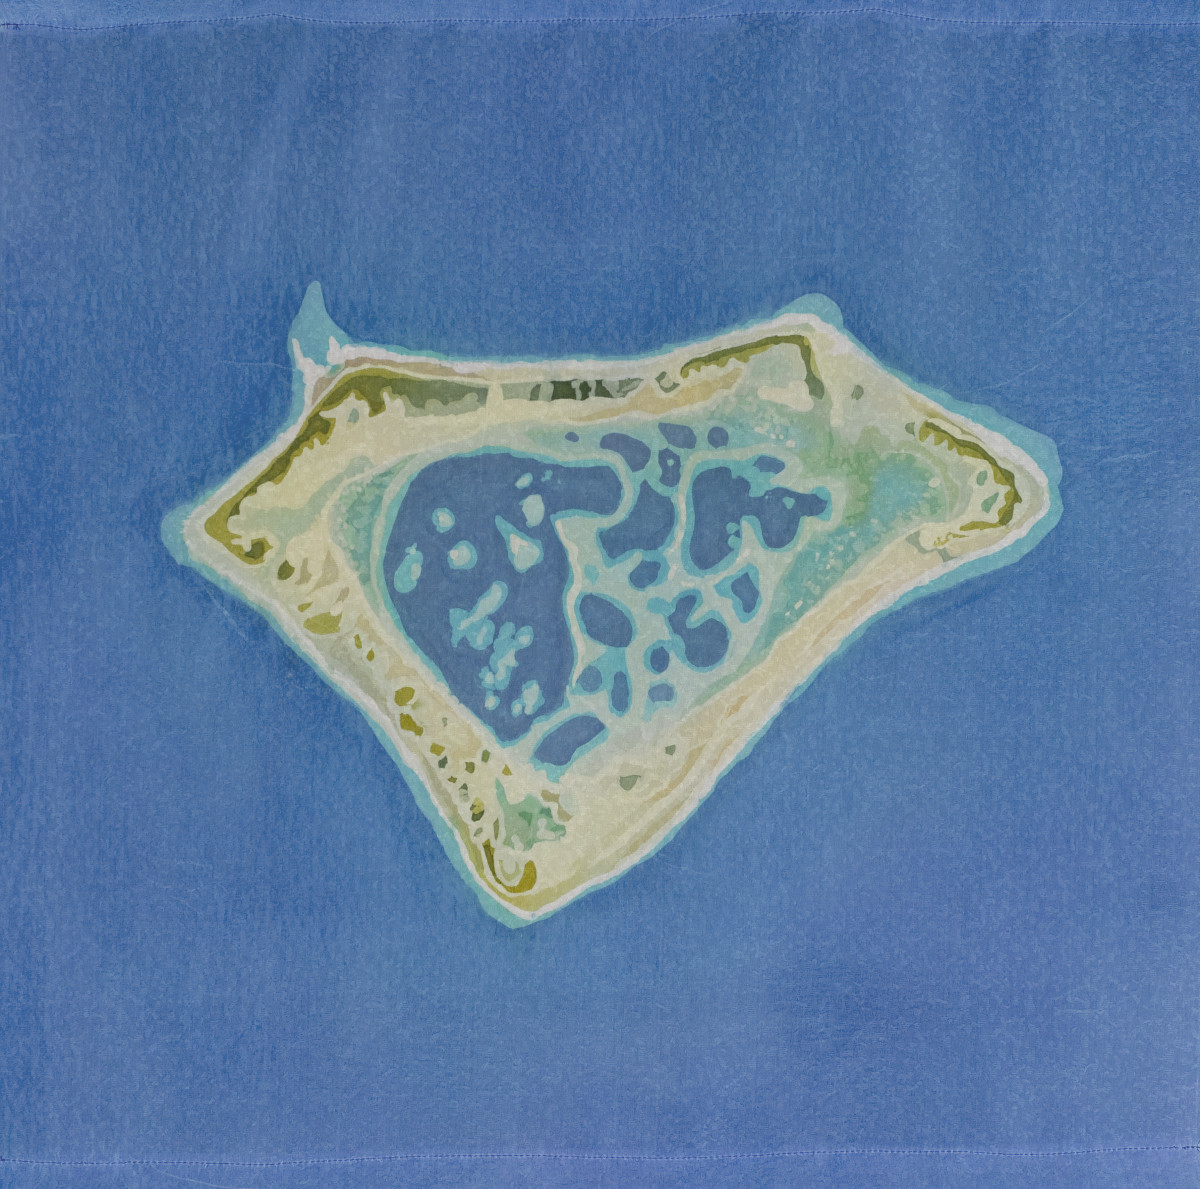 Atafu Atoll (Tokelau, South Pacific) by Mary Edna Fraser 